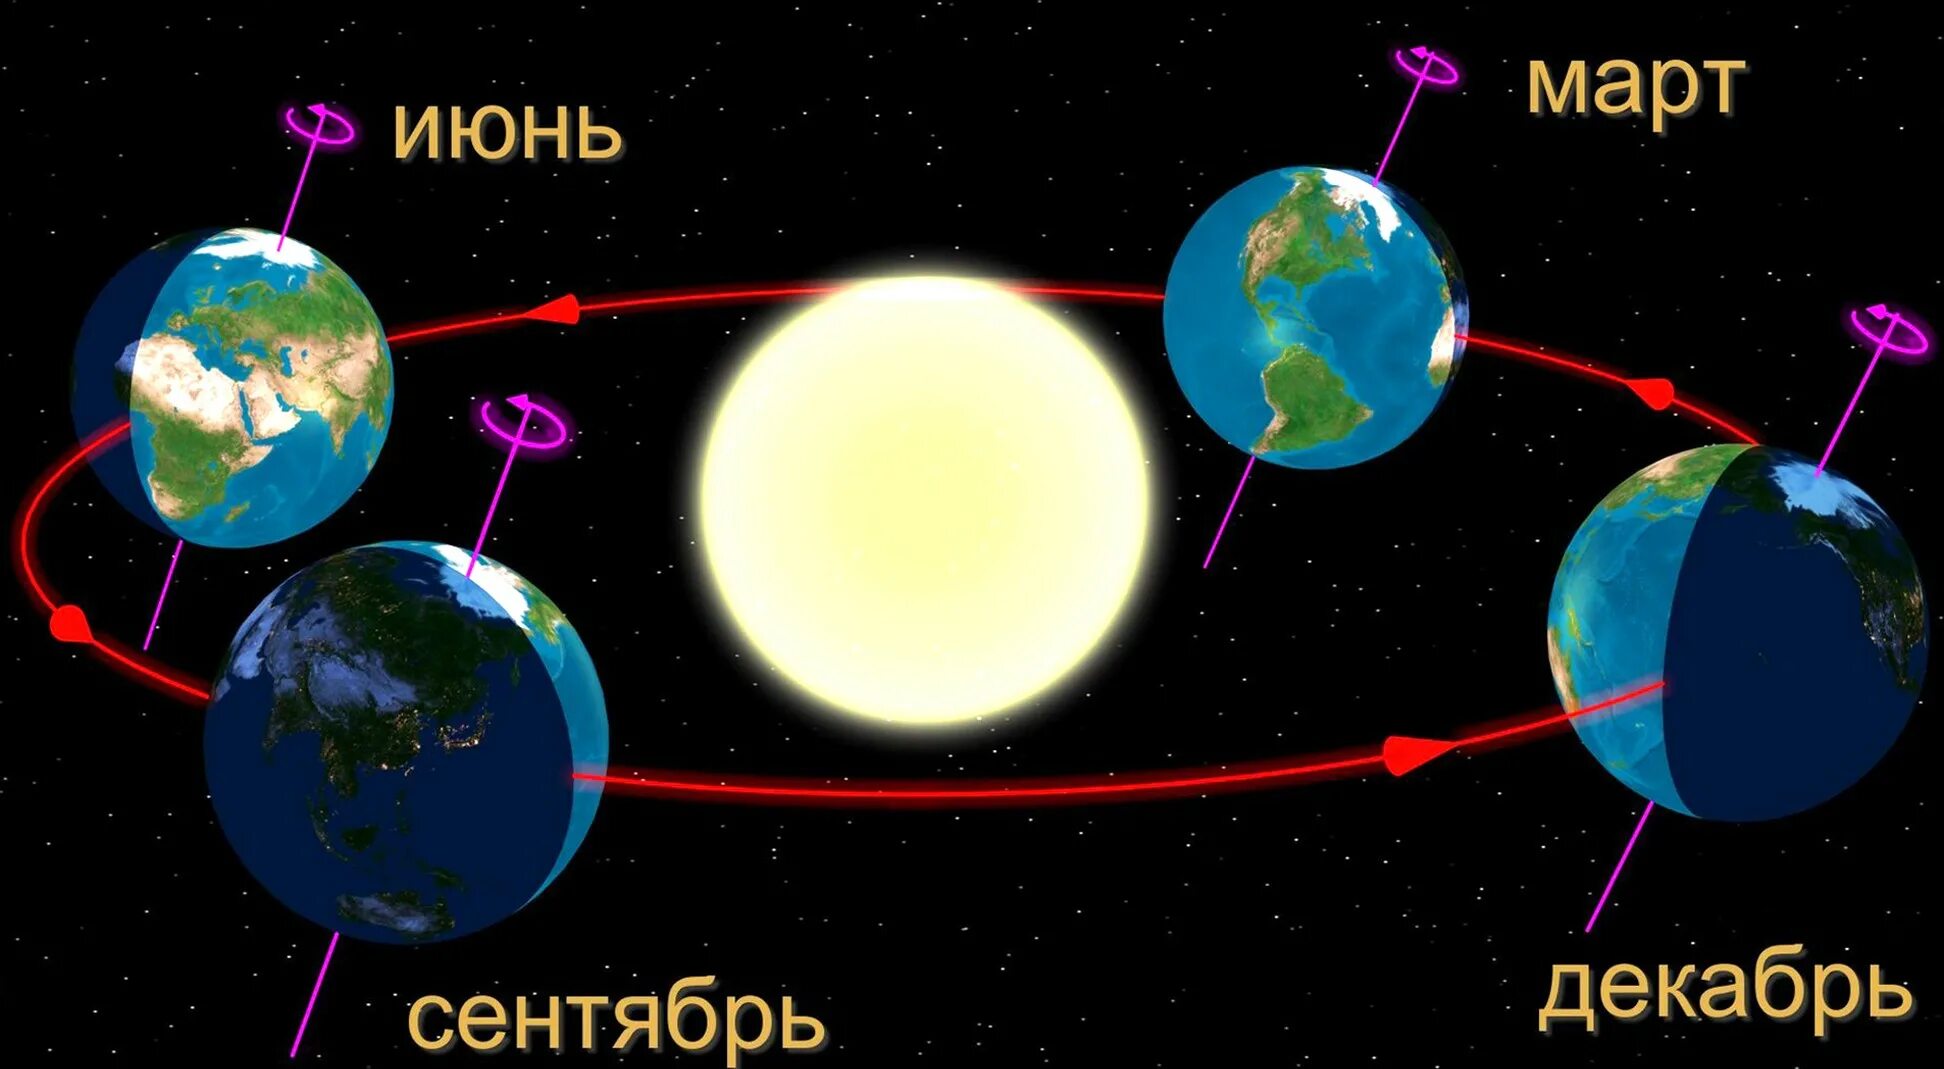 Орбита земли. Вращение земли. Годовое вращение земли вокруг солнца. Вращение земли вокруг солнца смена времен года. Смена времен года на земле определяется ее